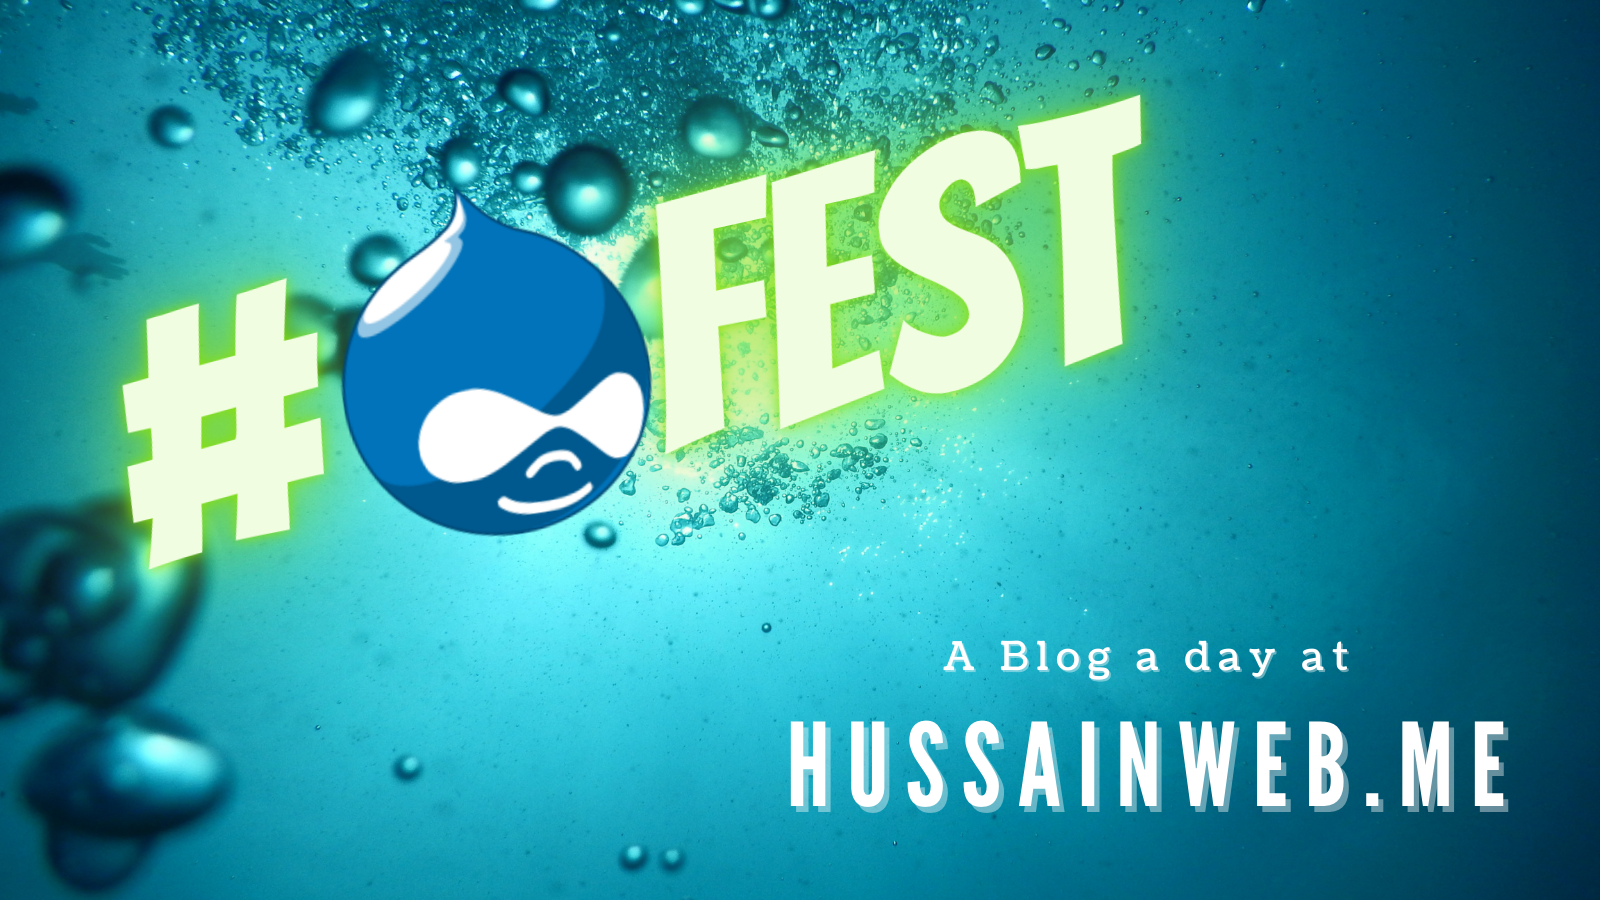 Let the fest begin! #DrupalFest